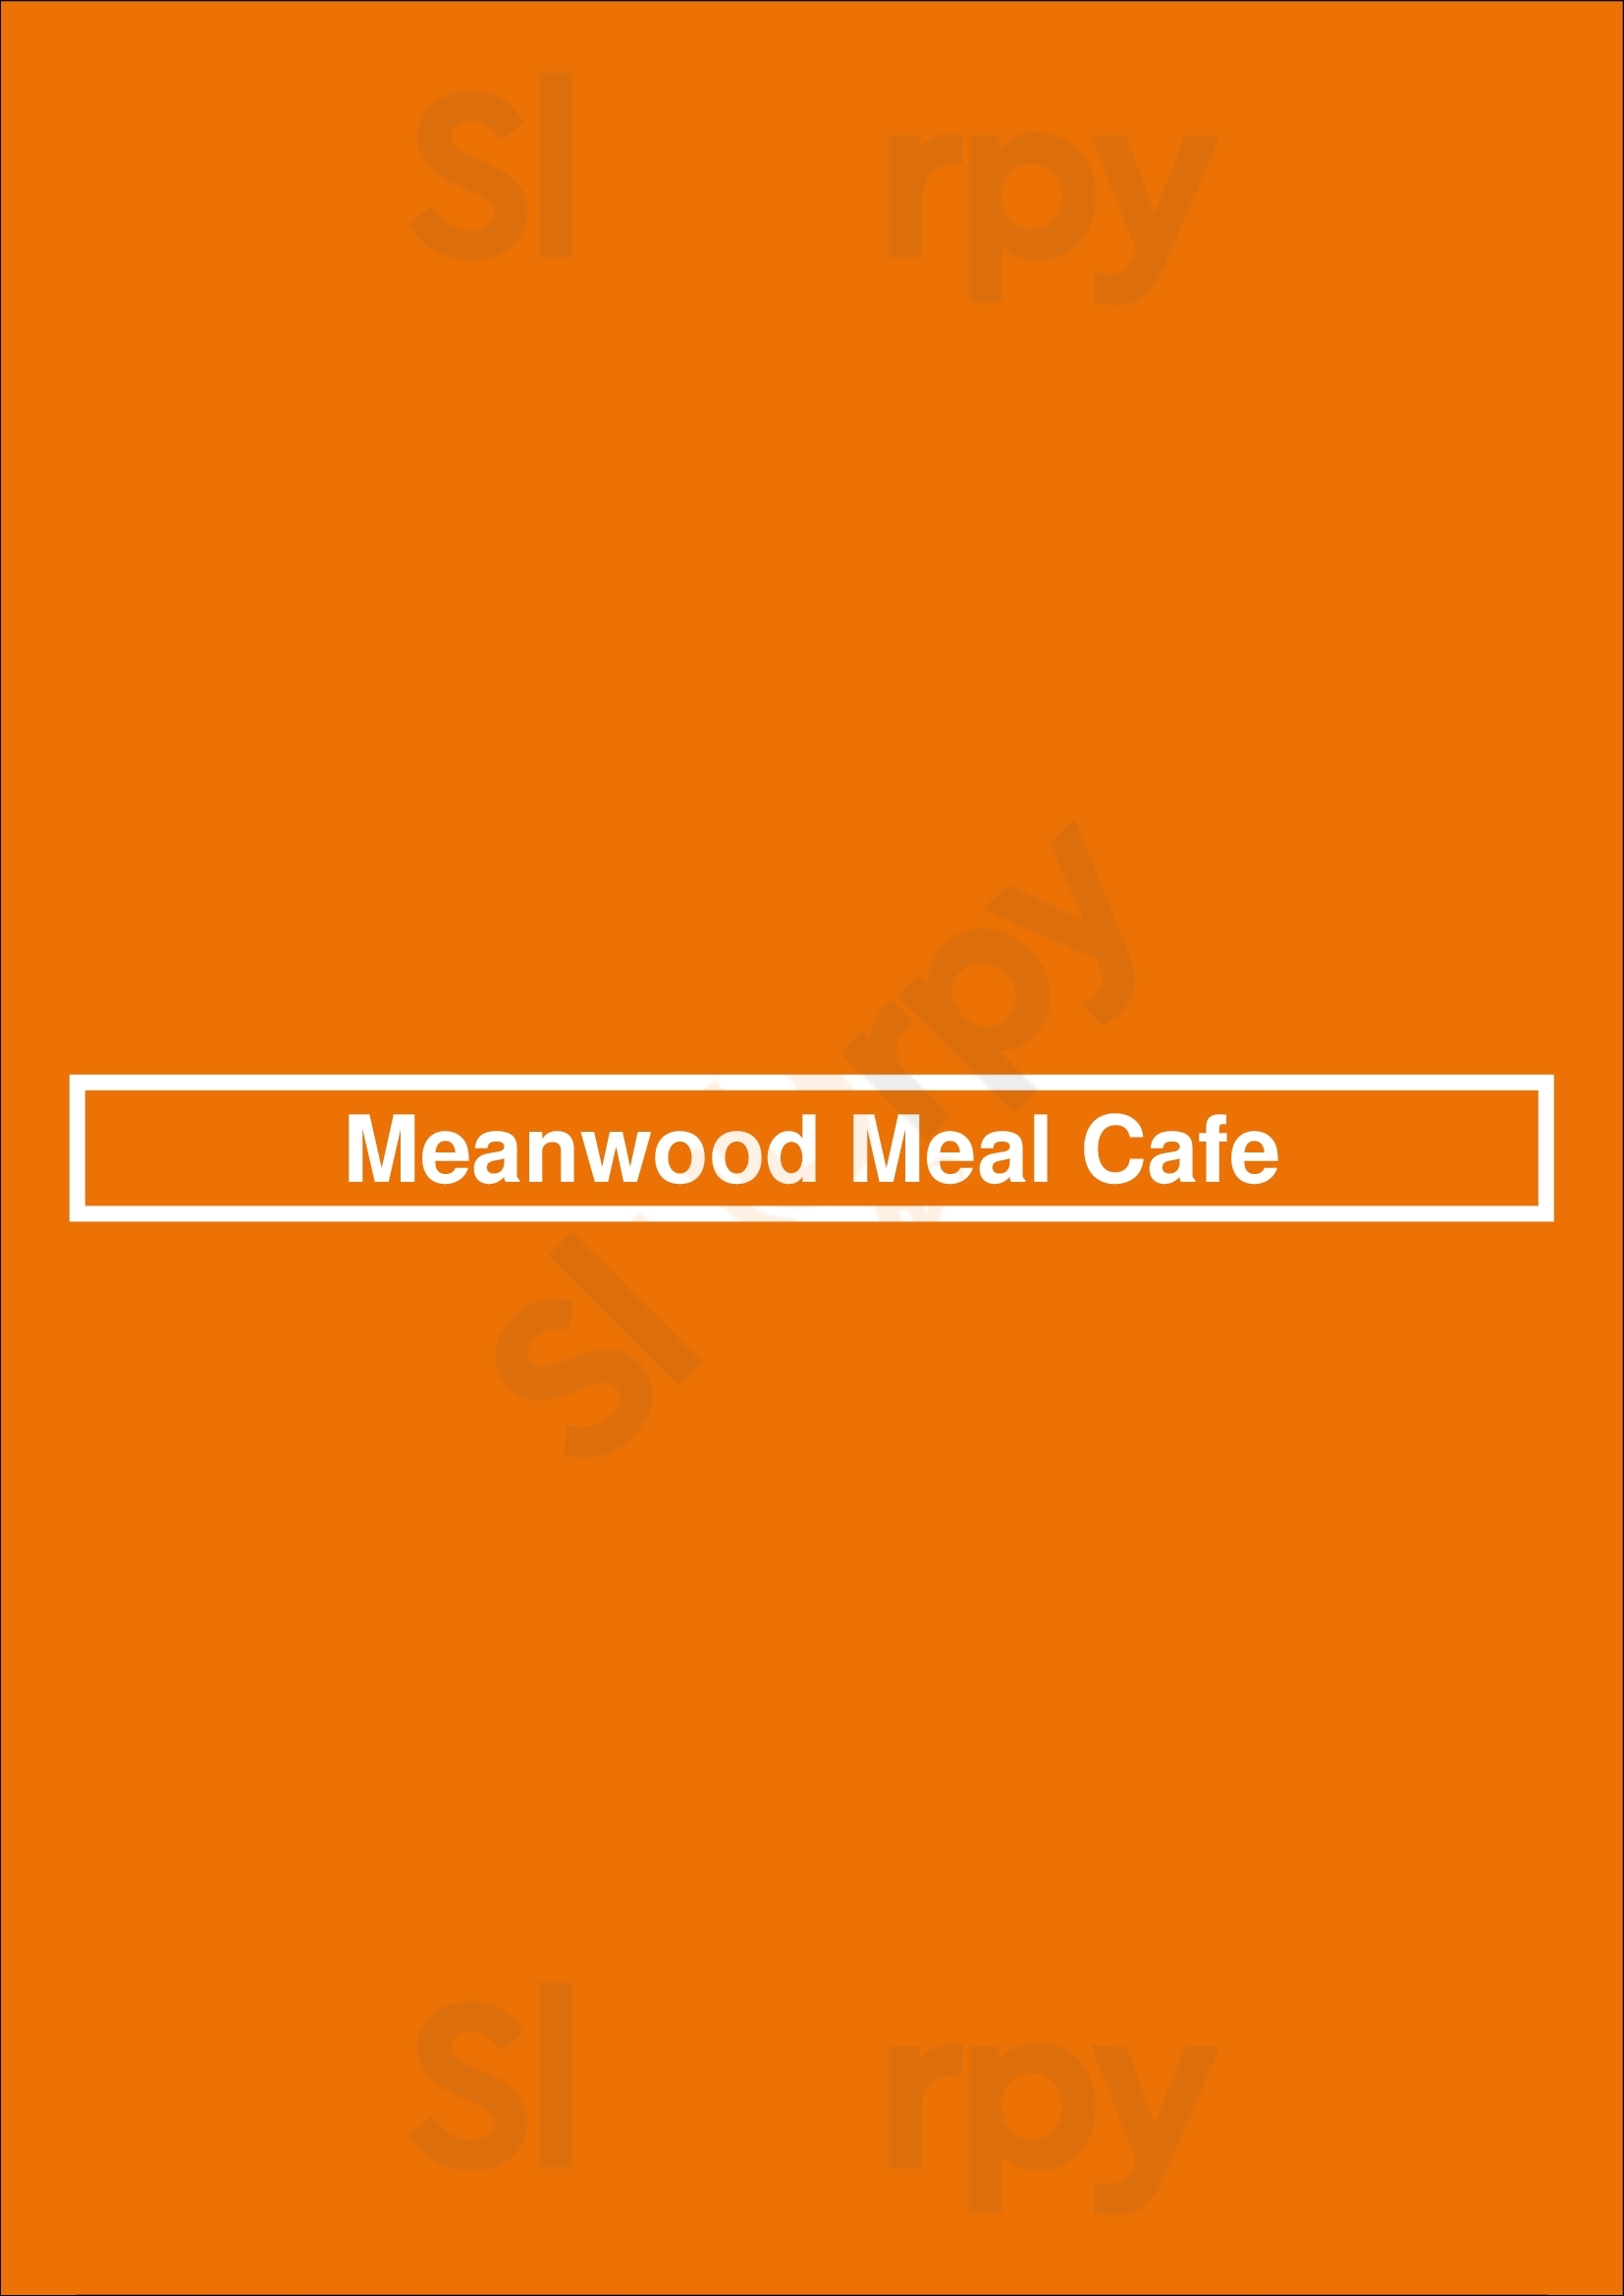 Meanwood Meal Cafe Leeds Menu - 1